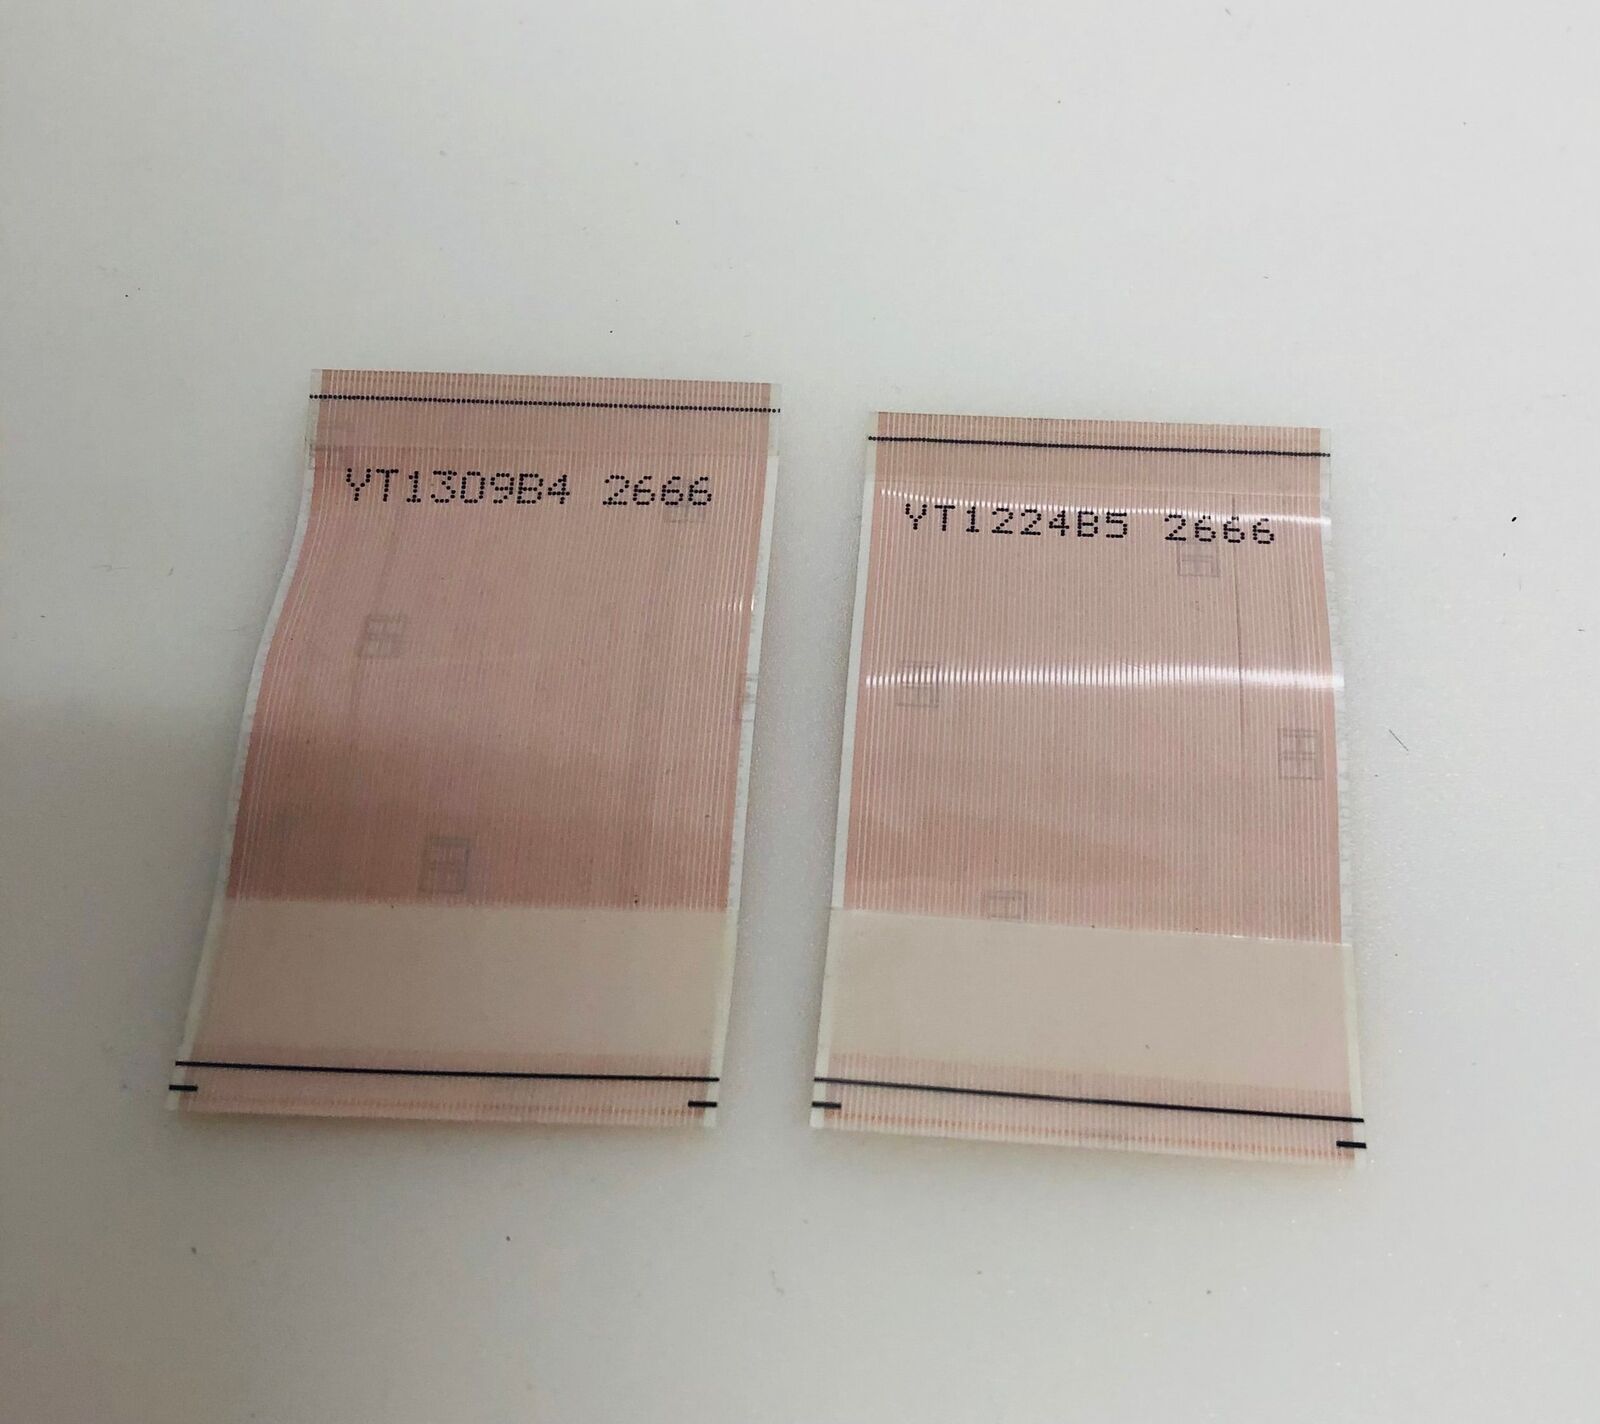 YT1309B4 YT1224B5 2666 LVDS CABLES - SAMSUNG UE46D8005